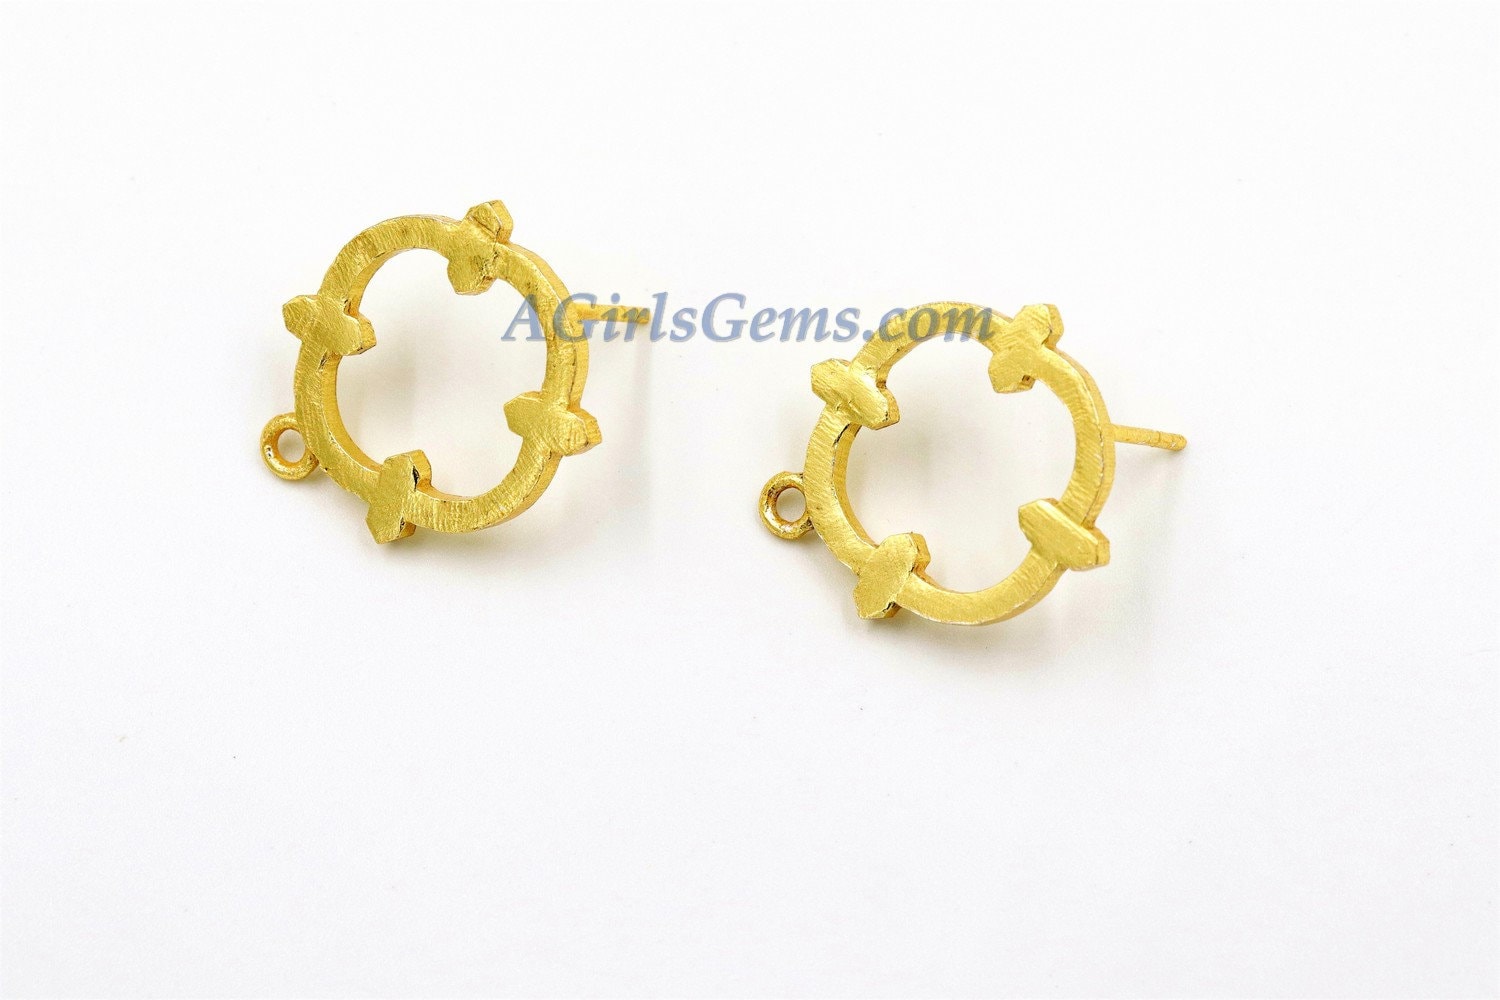 Brushed Gold Clover Quatrefoil Earrings, Closed Loop Cross Shape Stud Earring Findings #791, Matte Gold Earring studs, Jewelry Findings - A Girls Gems